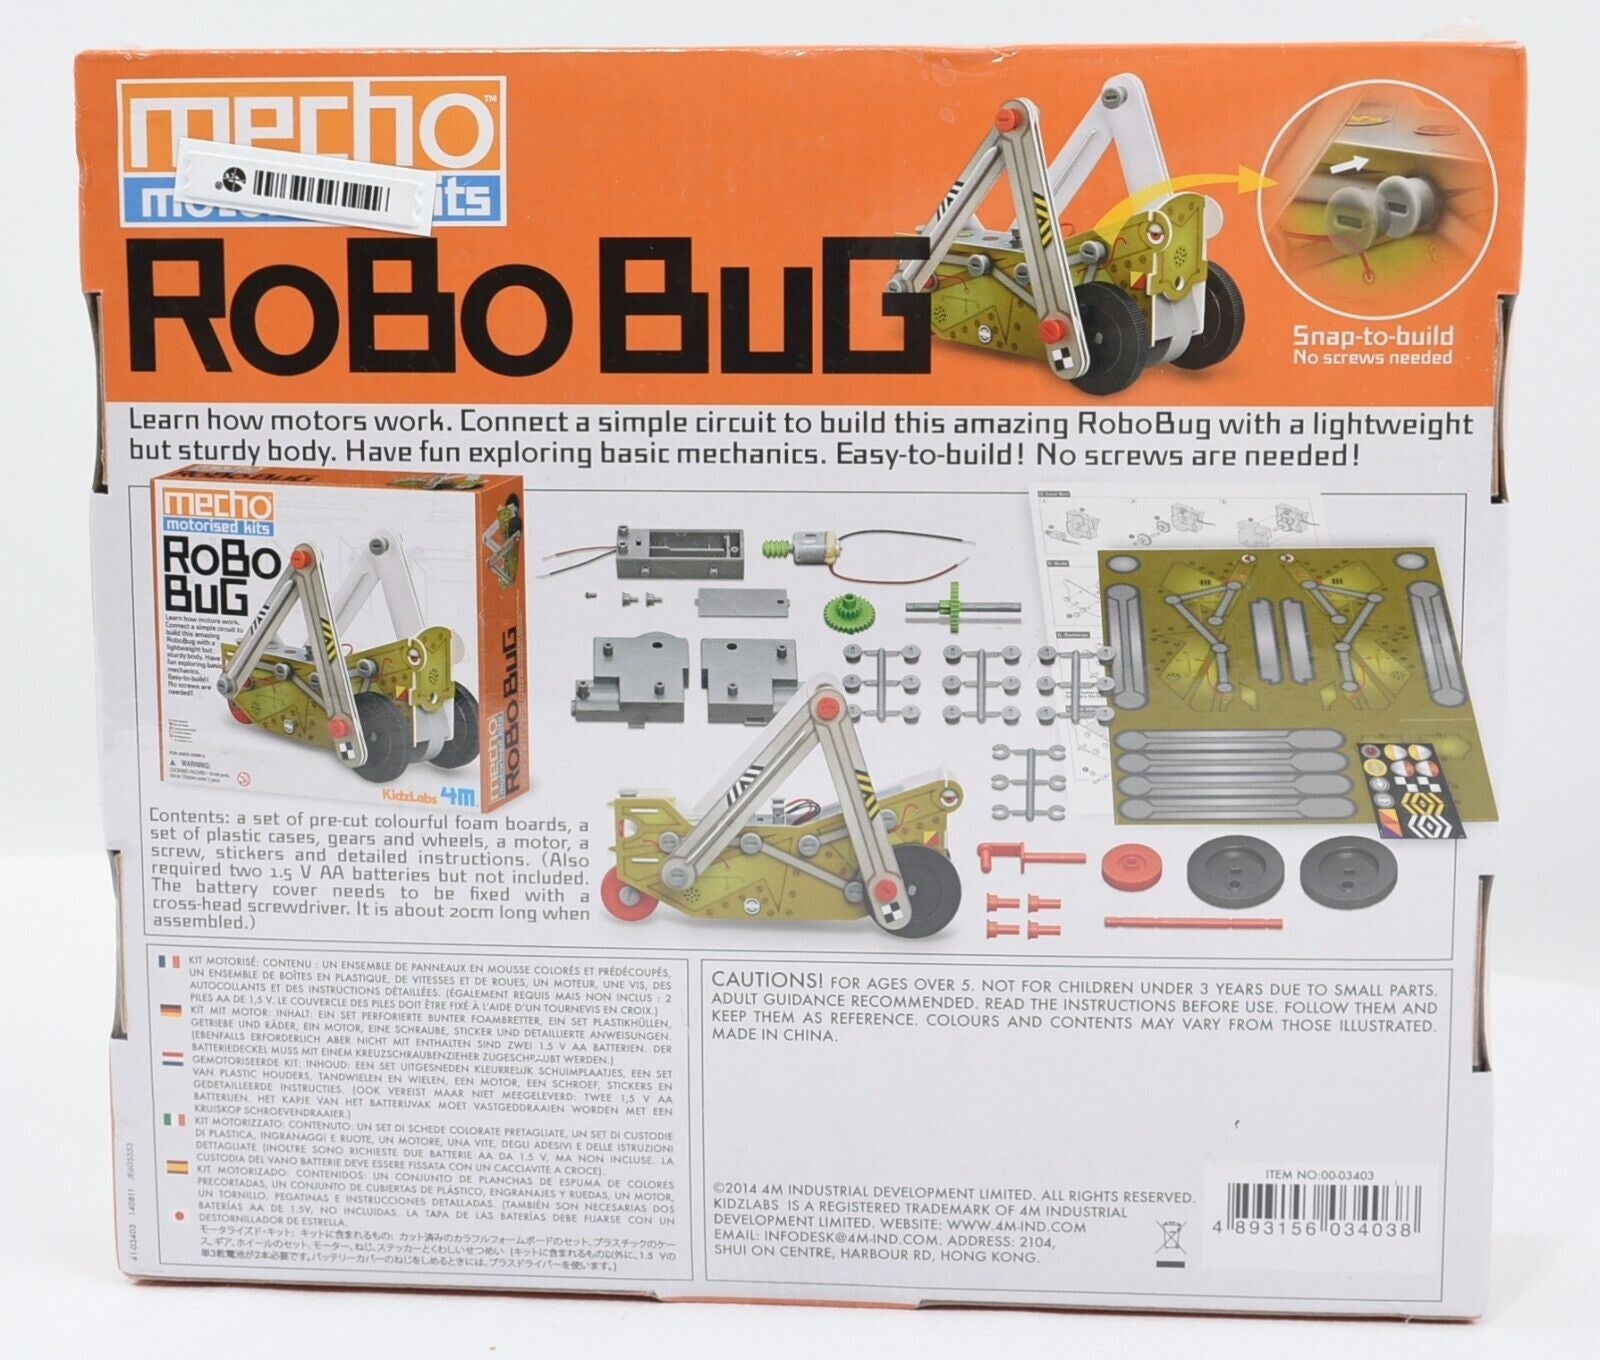 KidzLabs 4M Mecho Motorised Kits - RoboBug